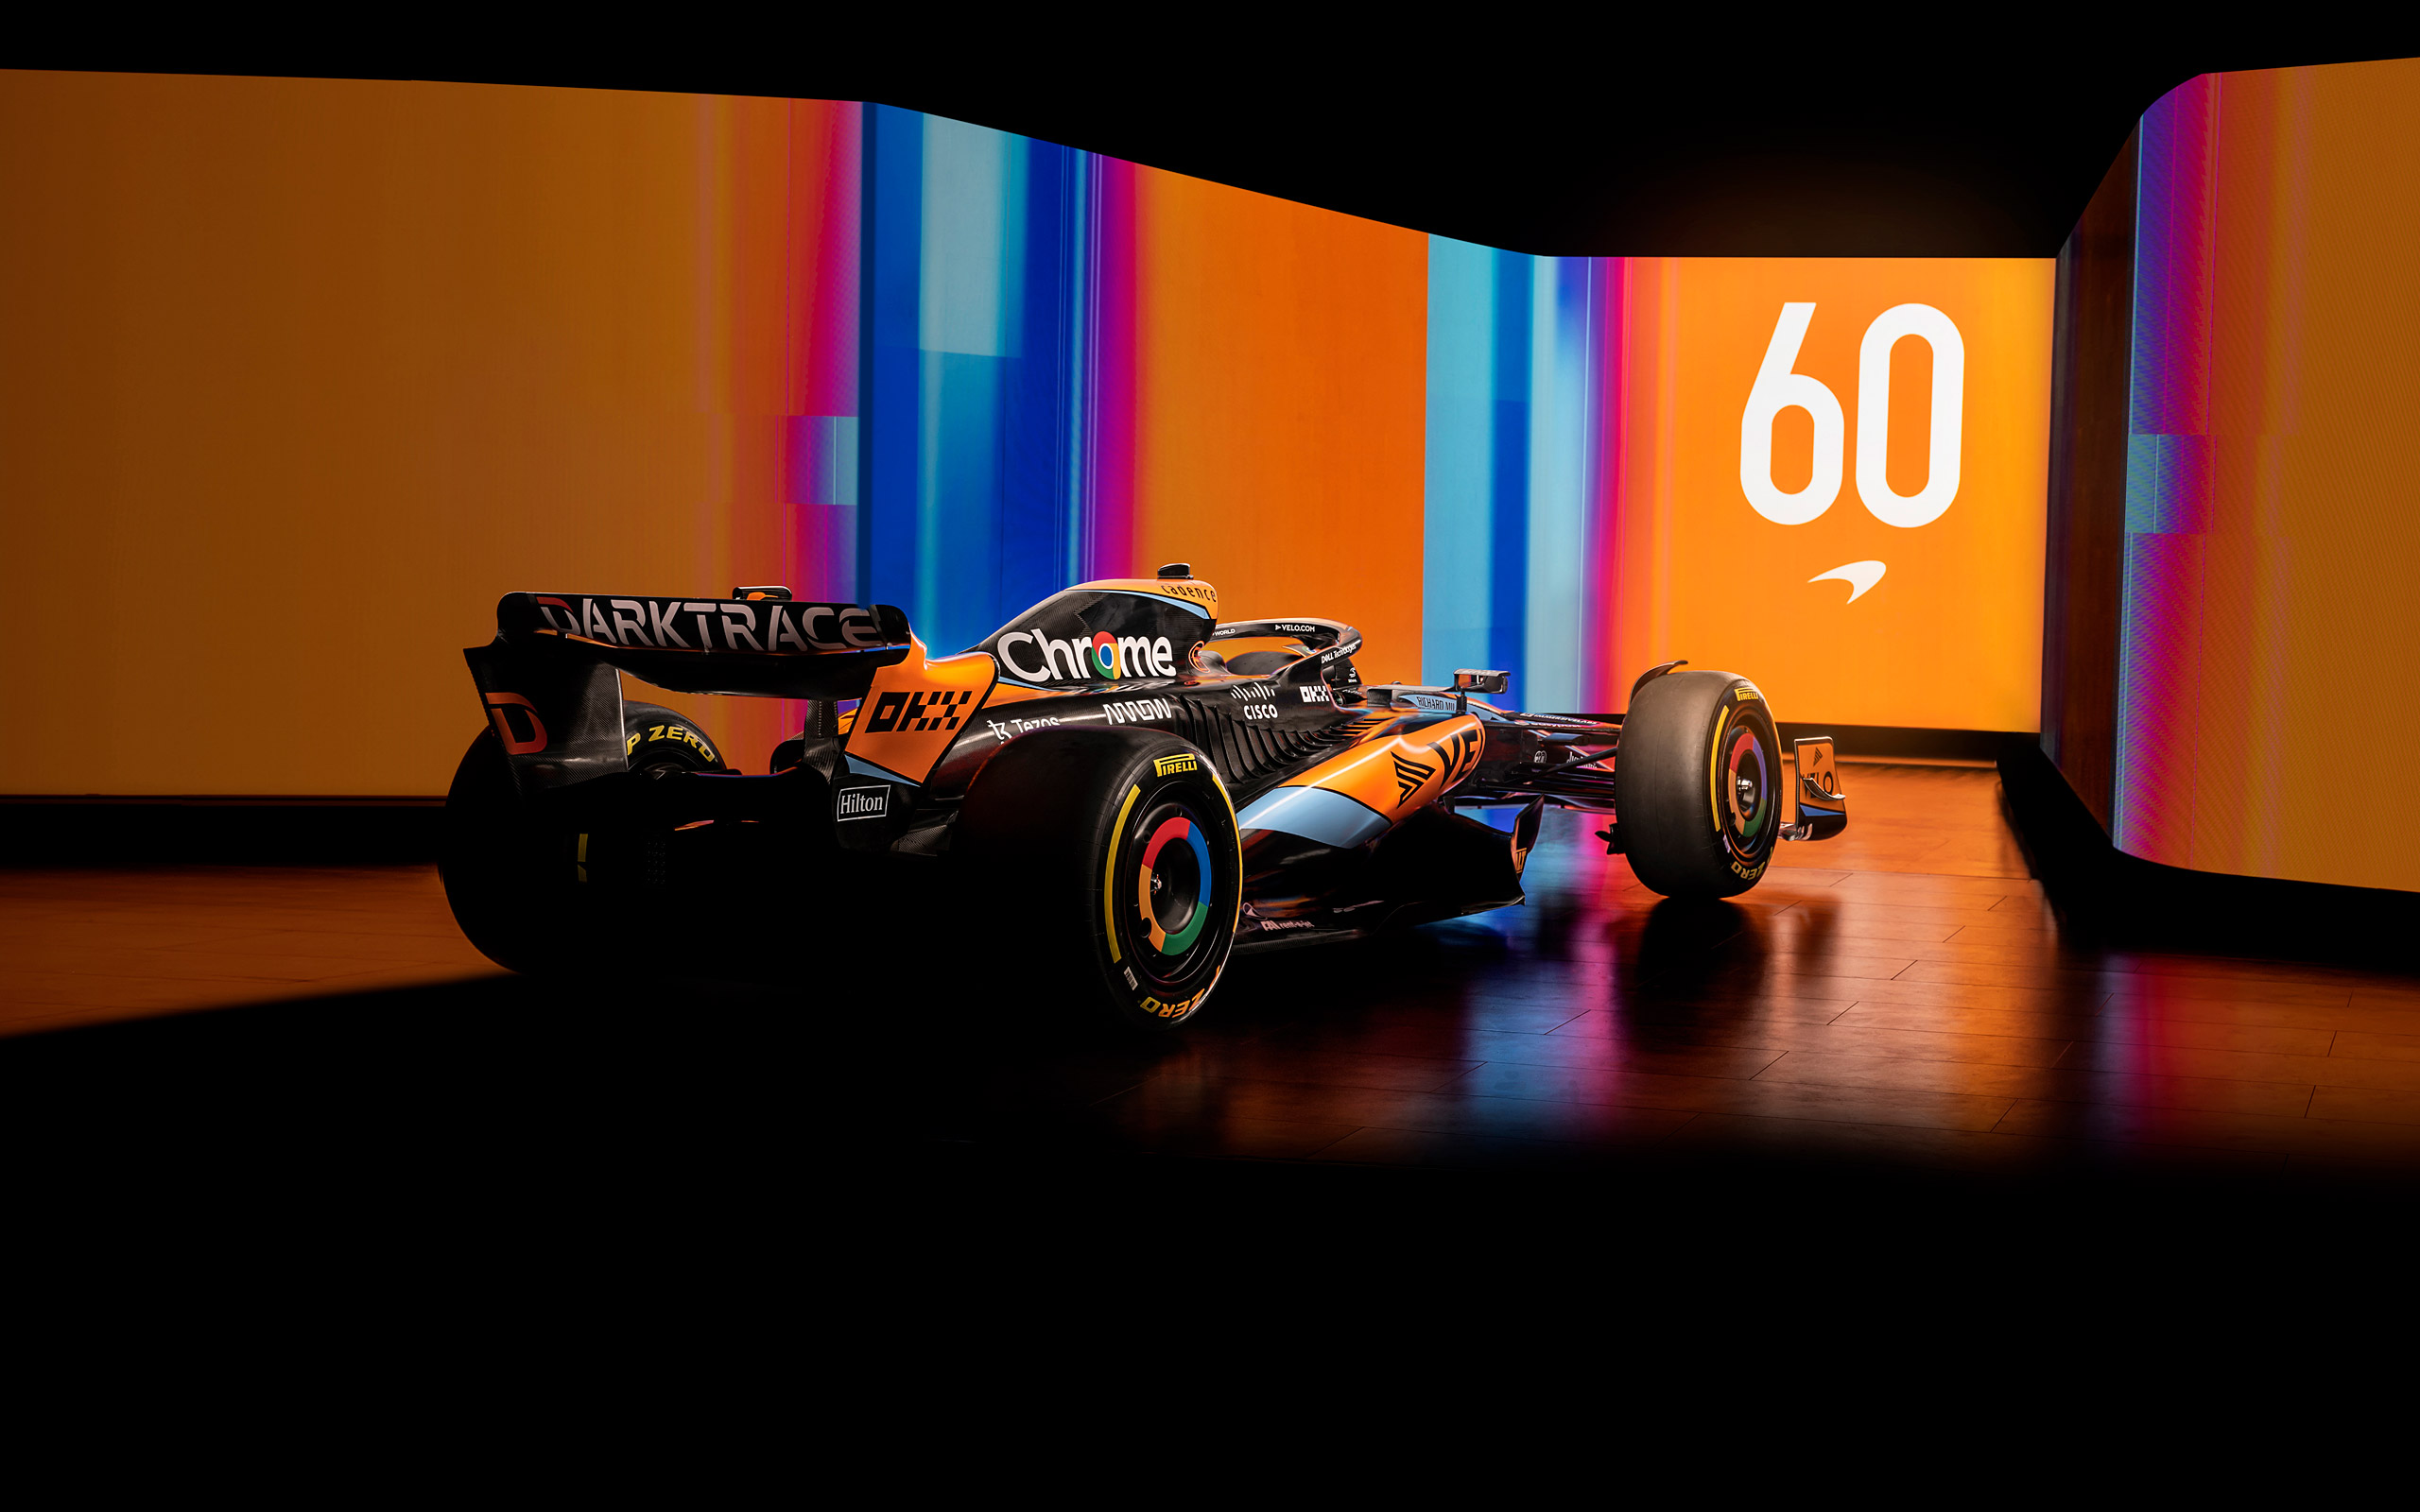  2023 McLaren MCL60 Wallpaper.